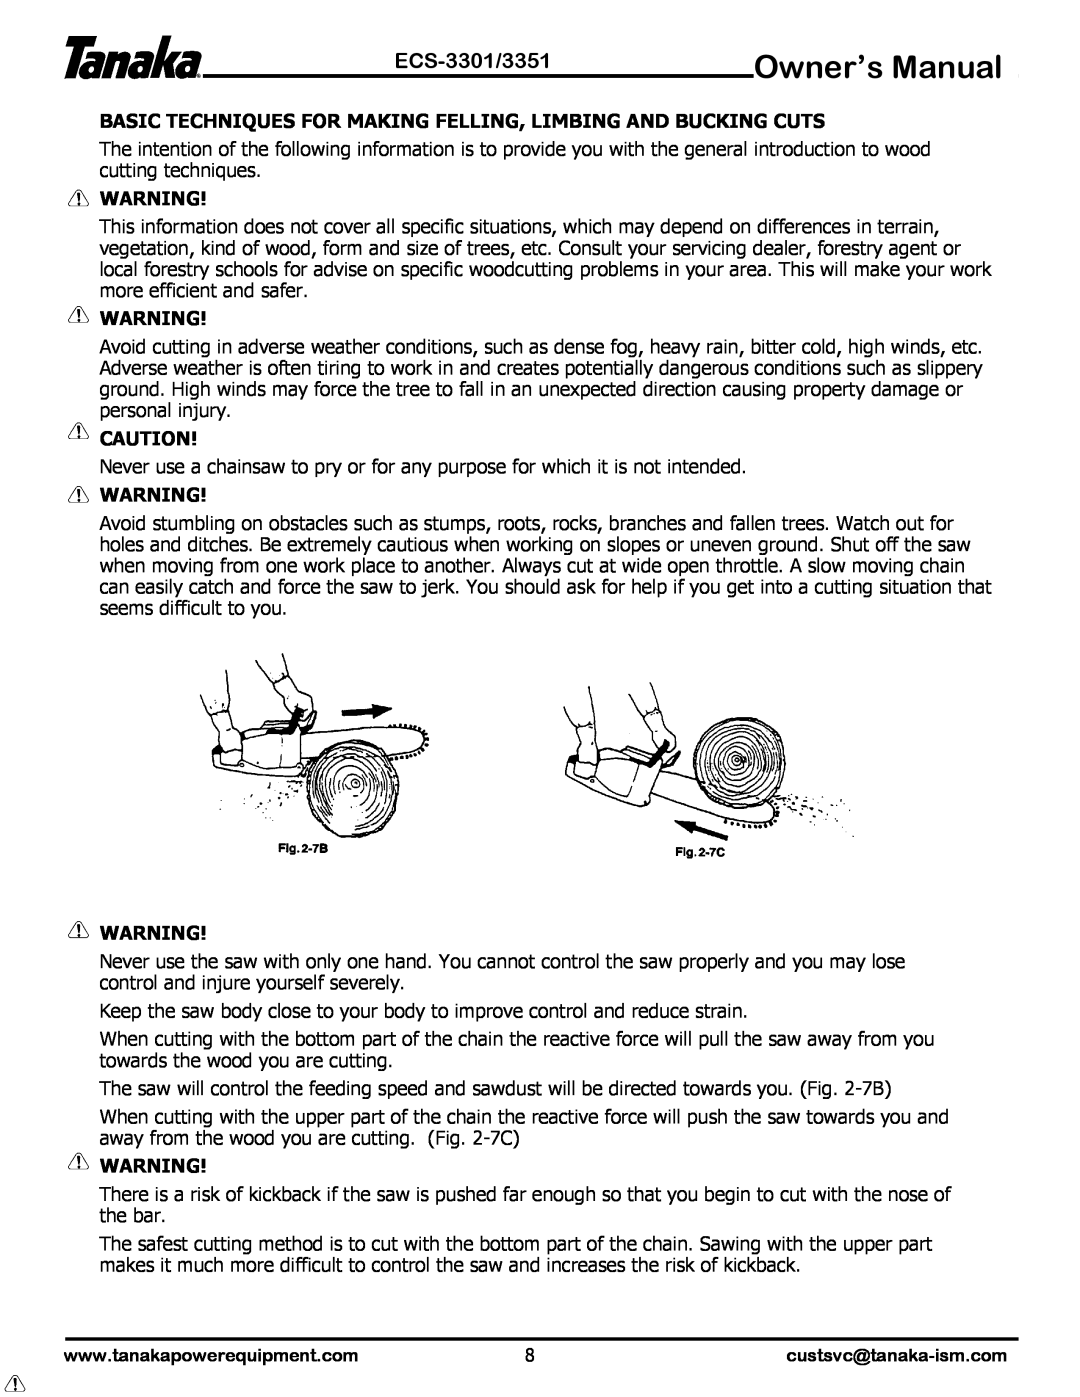 Tanaka ECS-3351 manual ECS-3301/3351, Basic Techniques For Making Felling, Limbing And Bucking Cuts 